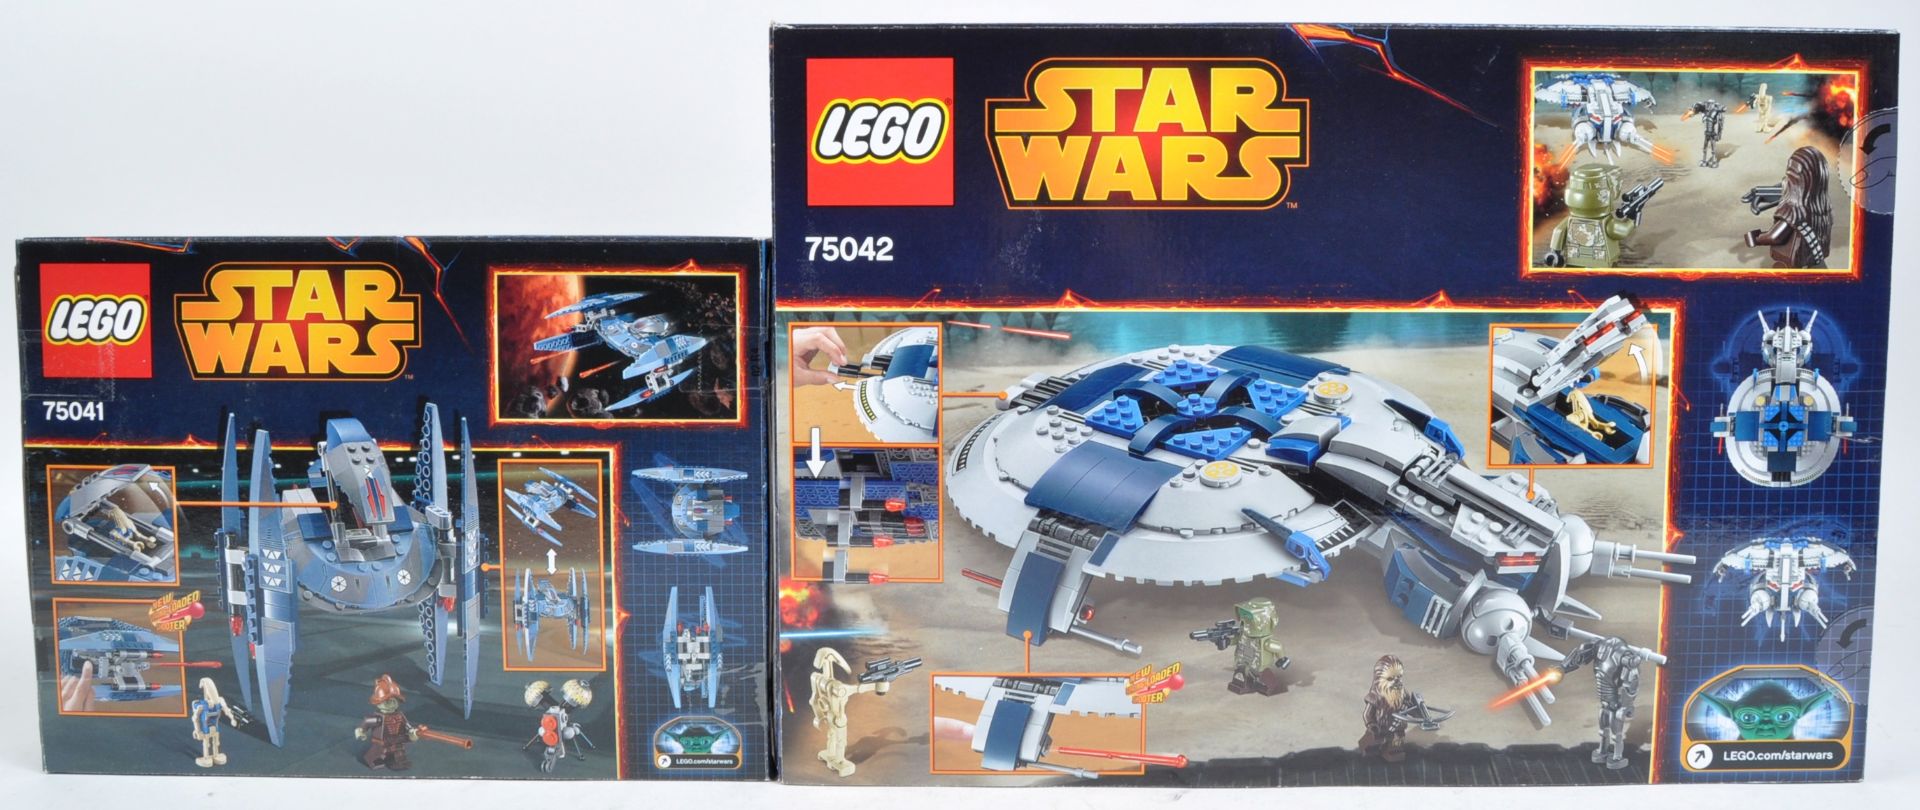 LEGO SETS - LEGO STAR WARS - 75041 / 75042 - Image 2 of 6